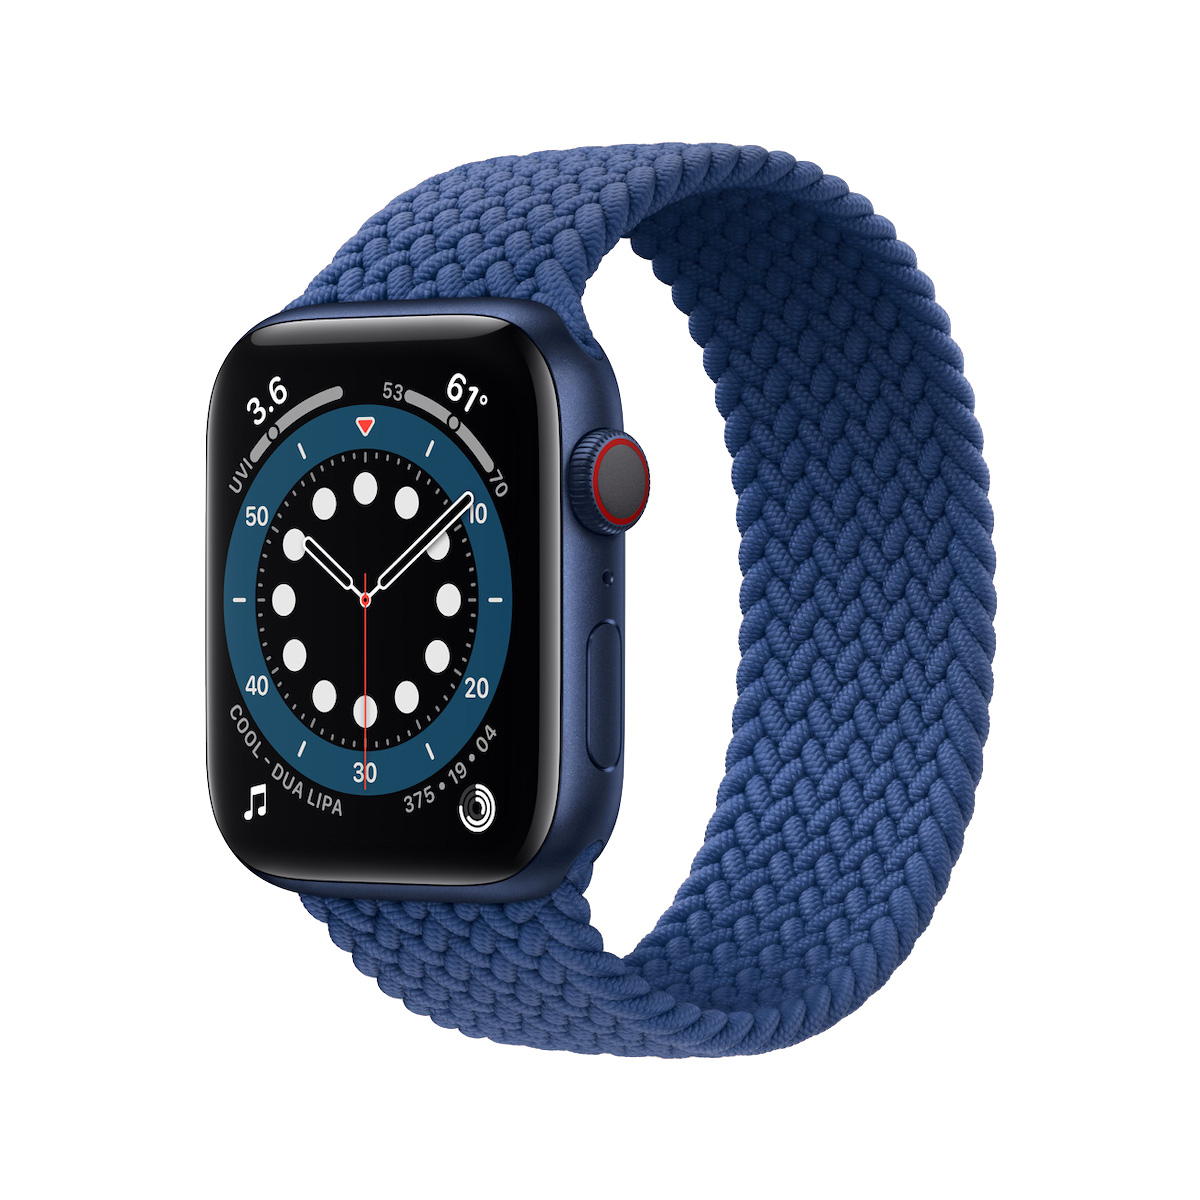 Apple Watch Series 6 Aluminum Blue